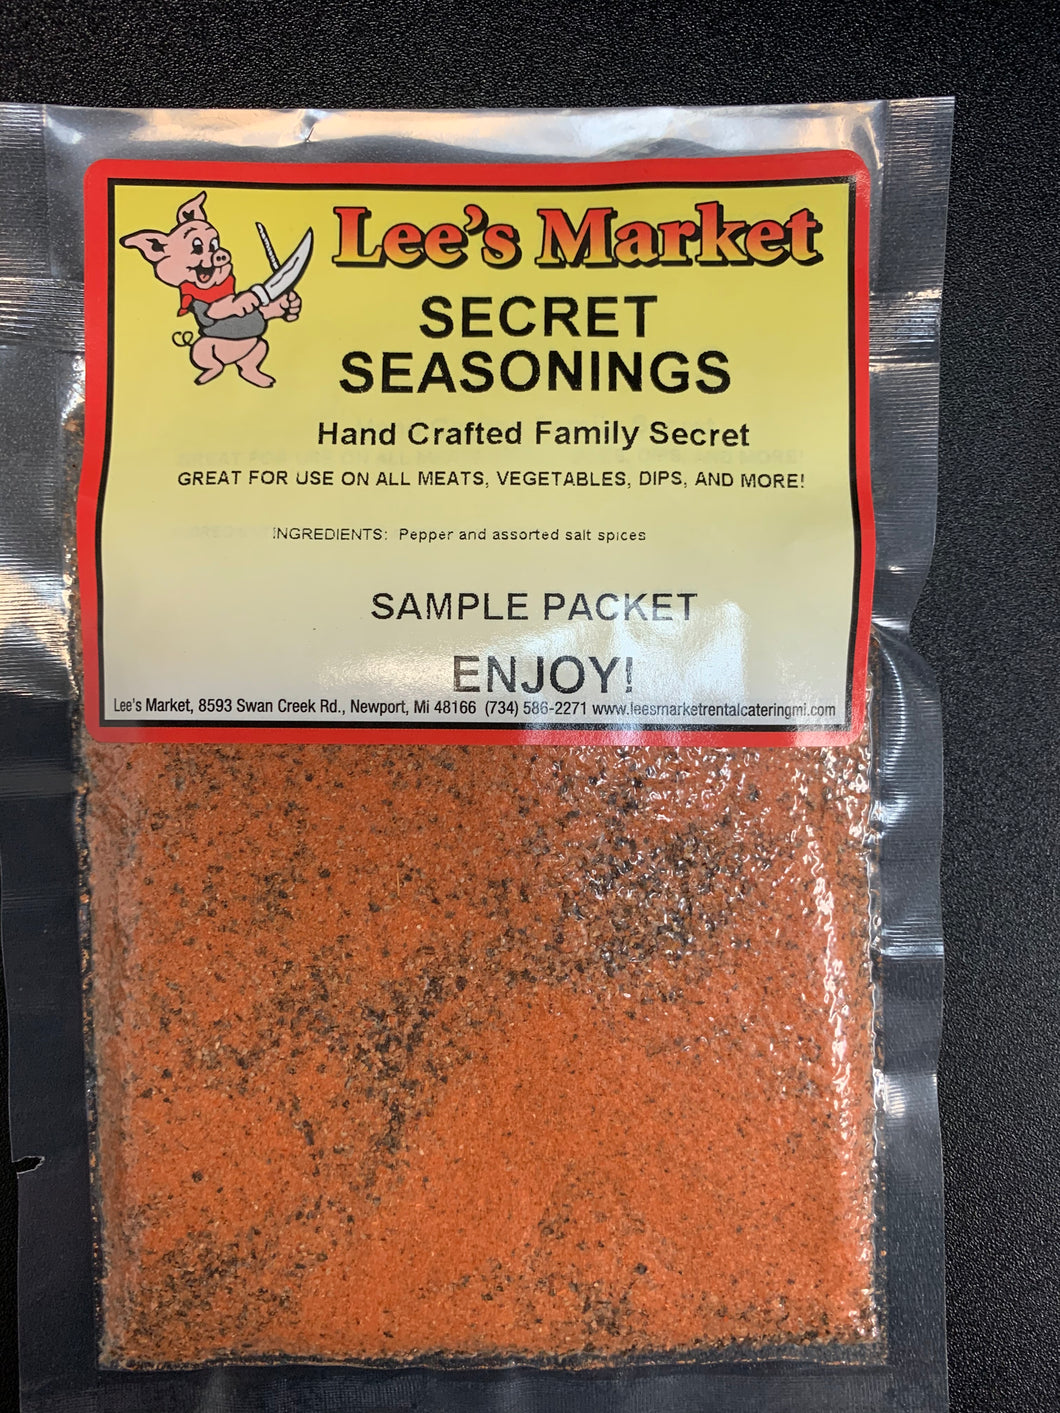 Lee's Market Secret Seasonings